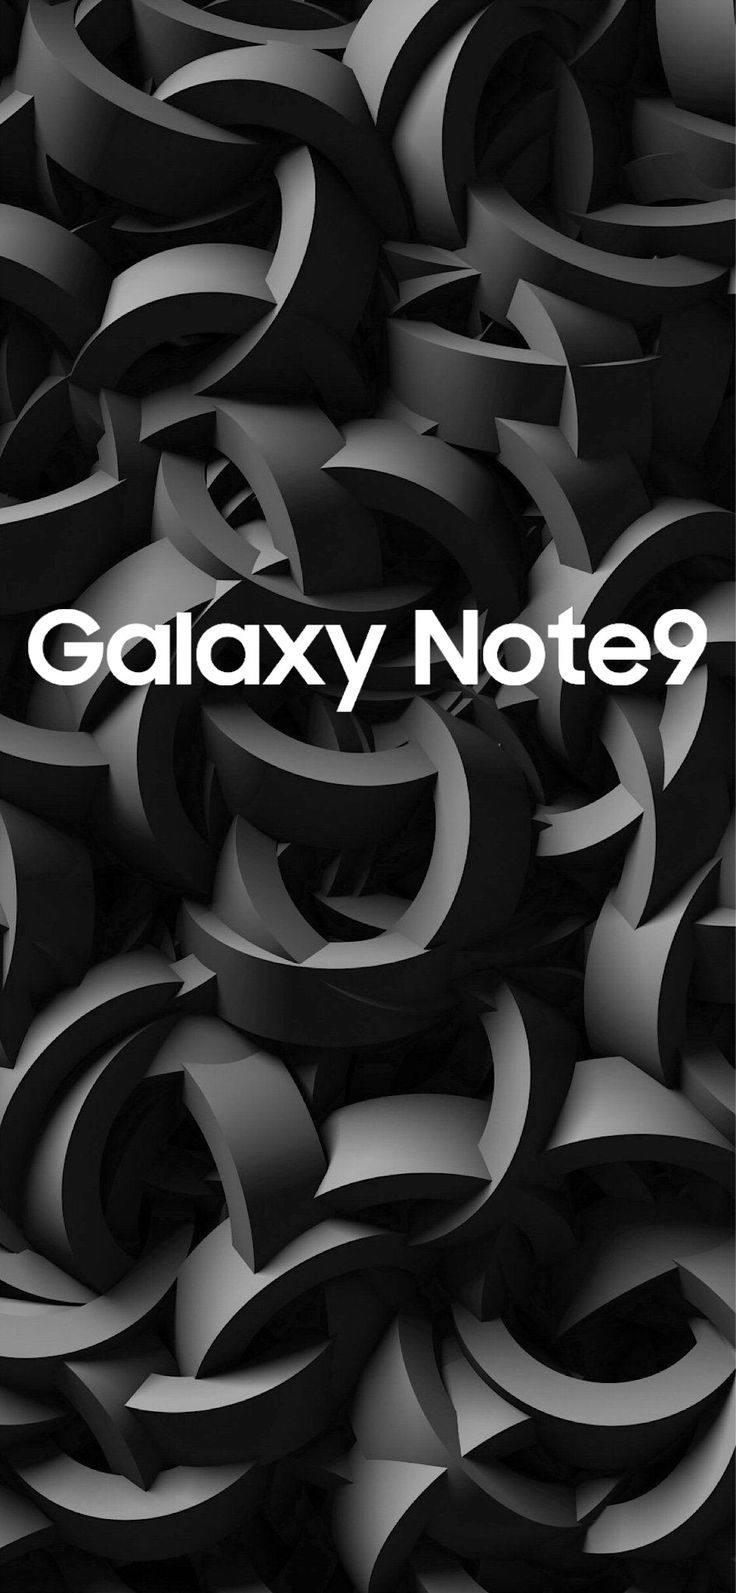 Galaxy Note 9 Walpaper Created by Vernon Dark. Galaxy phone wallpaper, Galaxy, Galaxy note 9